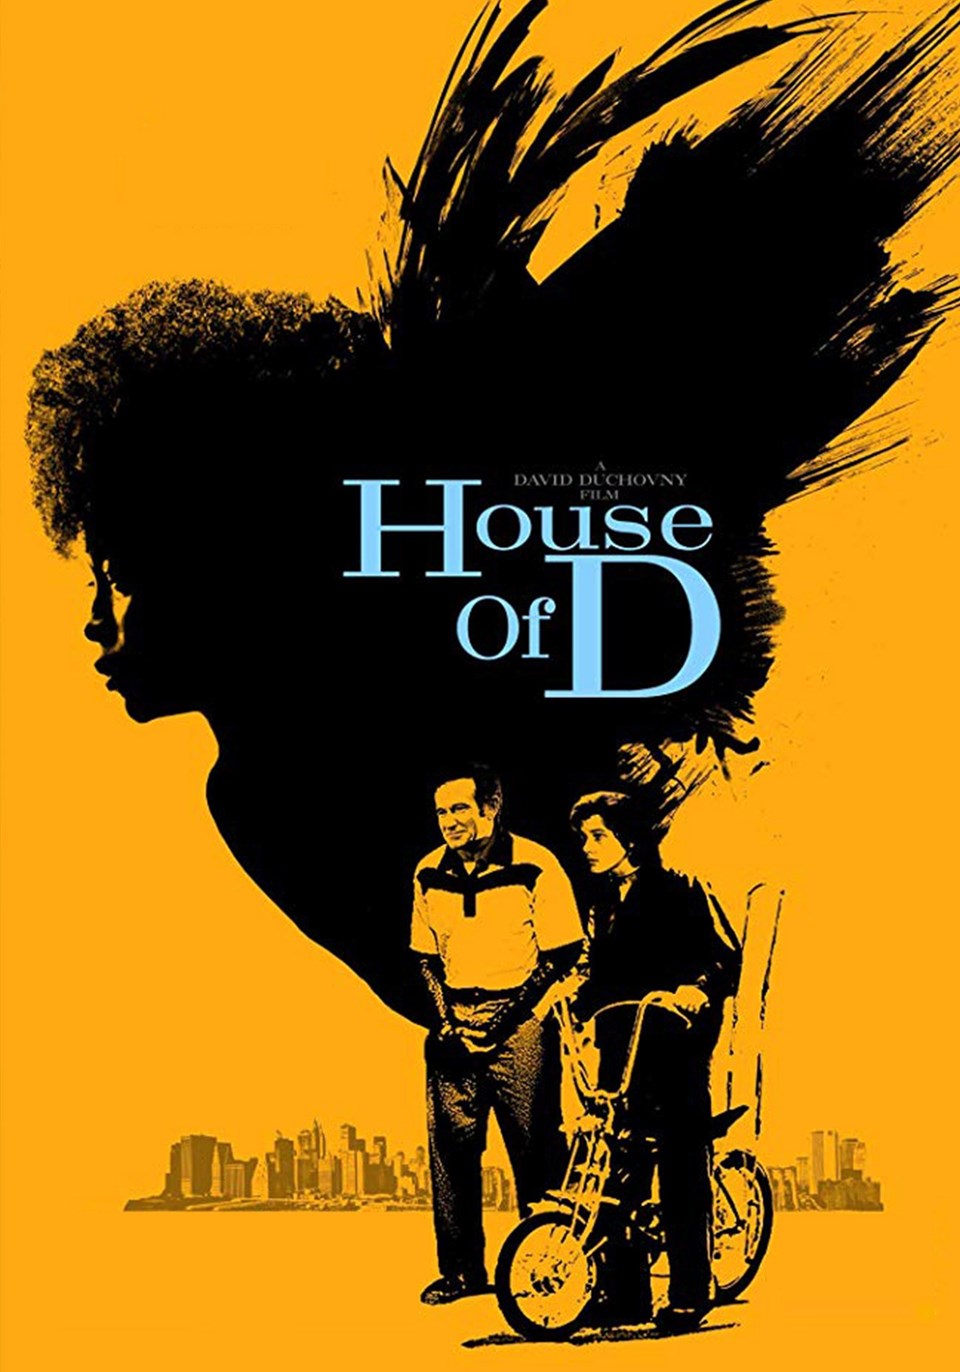 puhutv'den günün filmi: Can Dostlar (House Of D) - 1